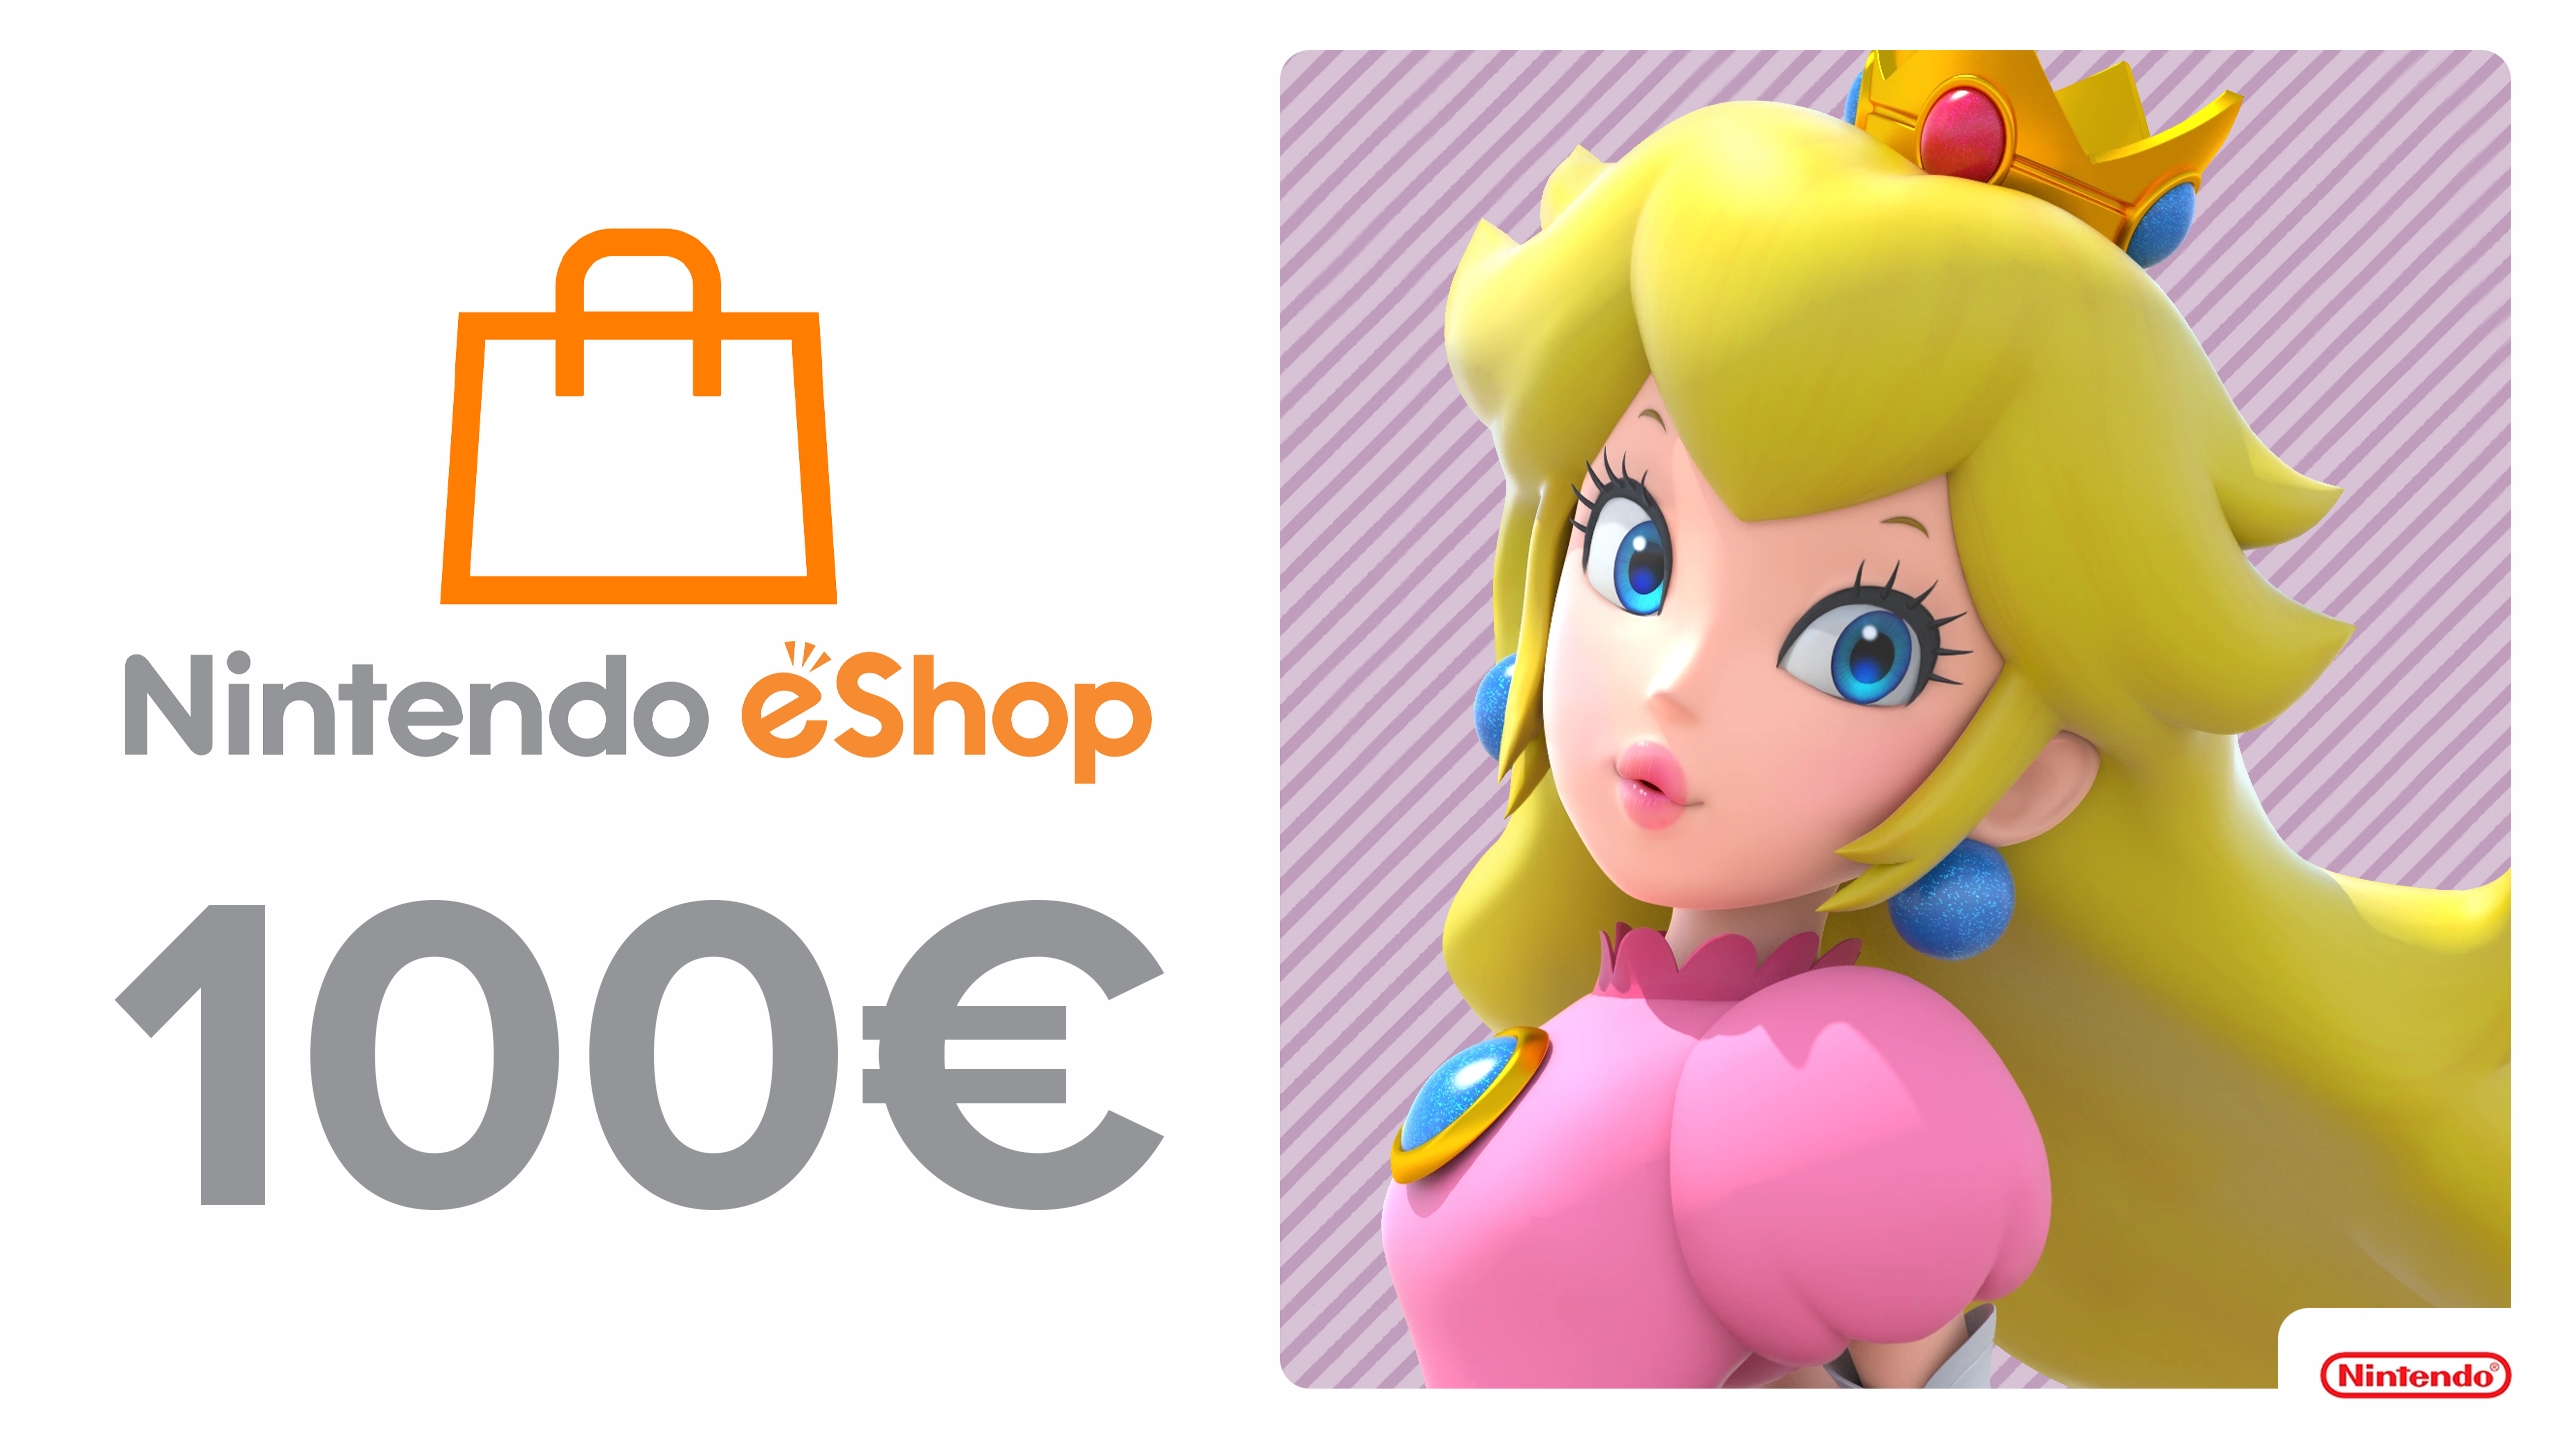 Vred morgenmad eksplodere Buy Nintendo eShop Card 100€ Nintendo Eshop